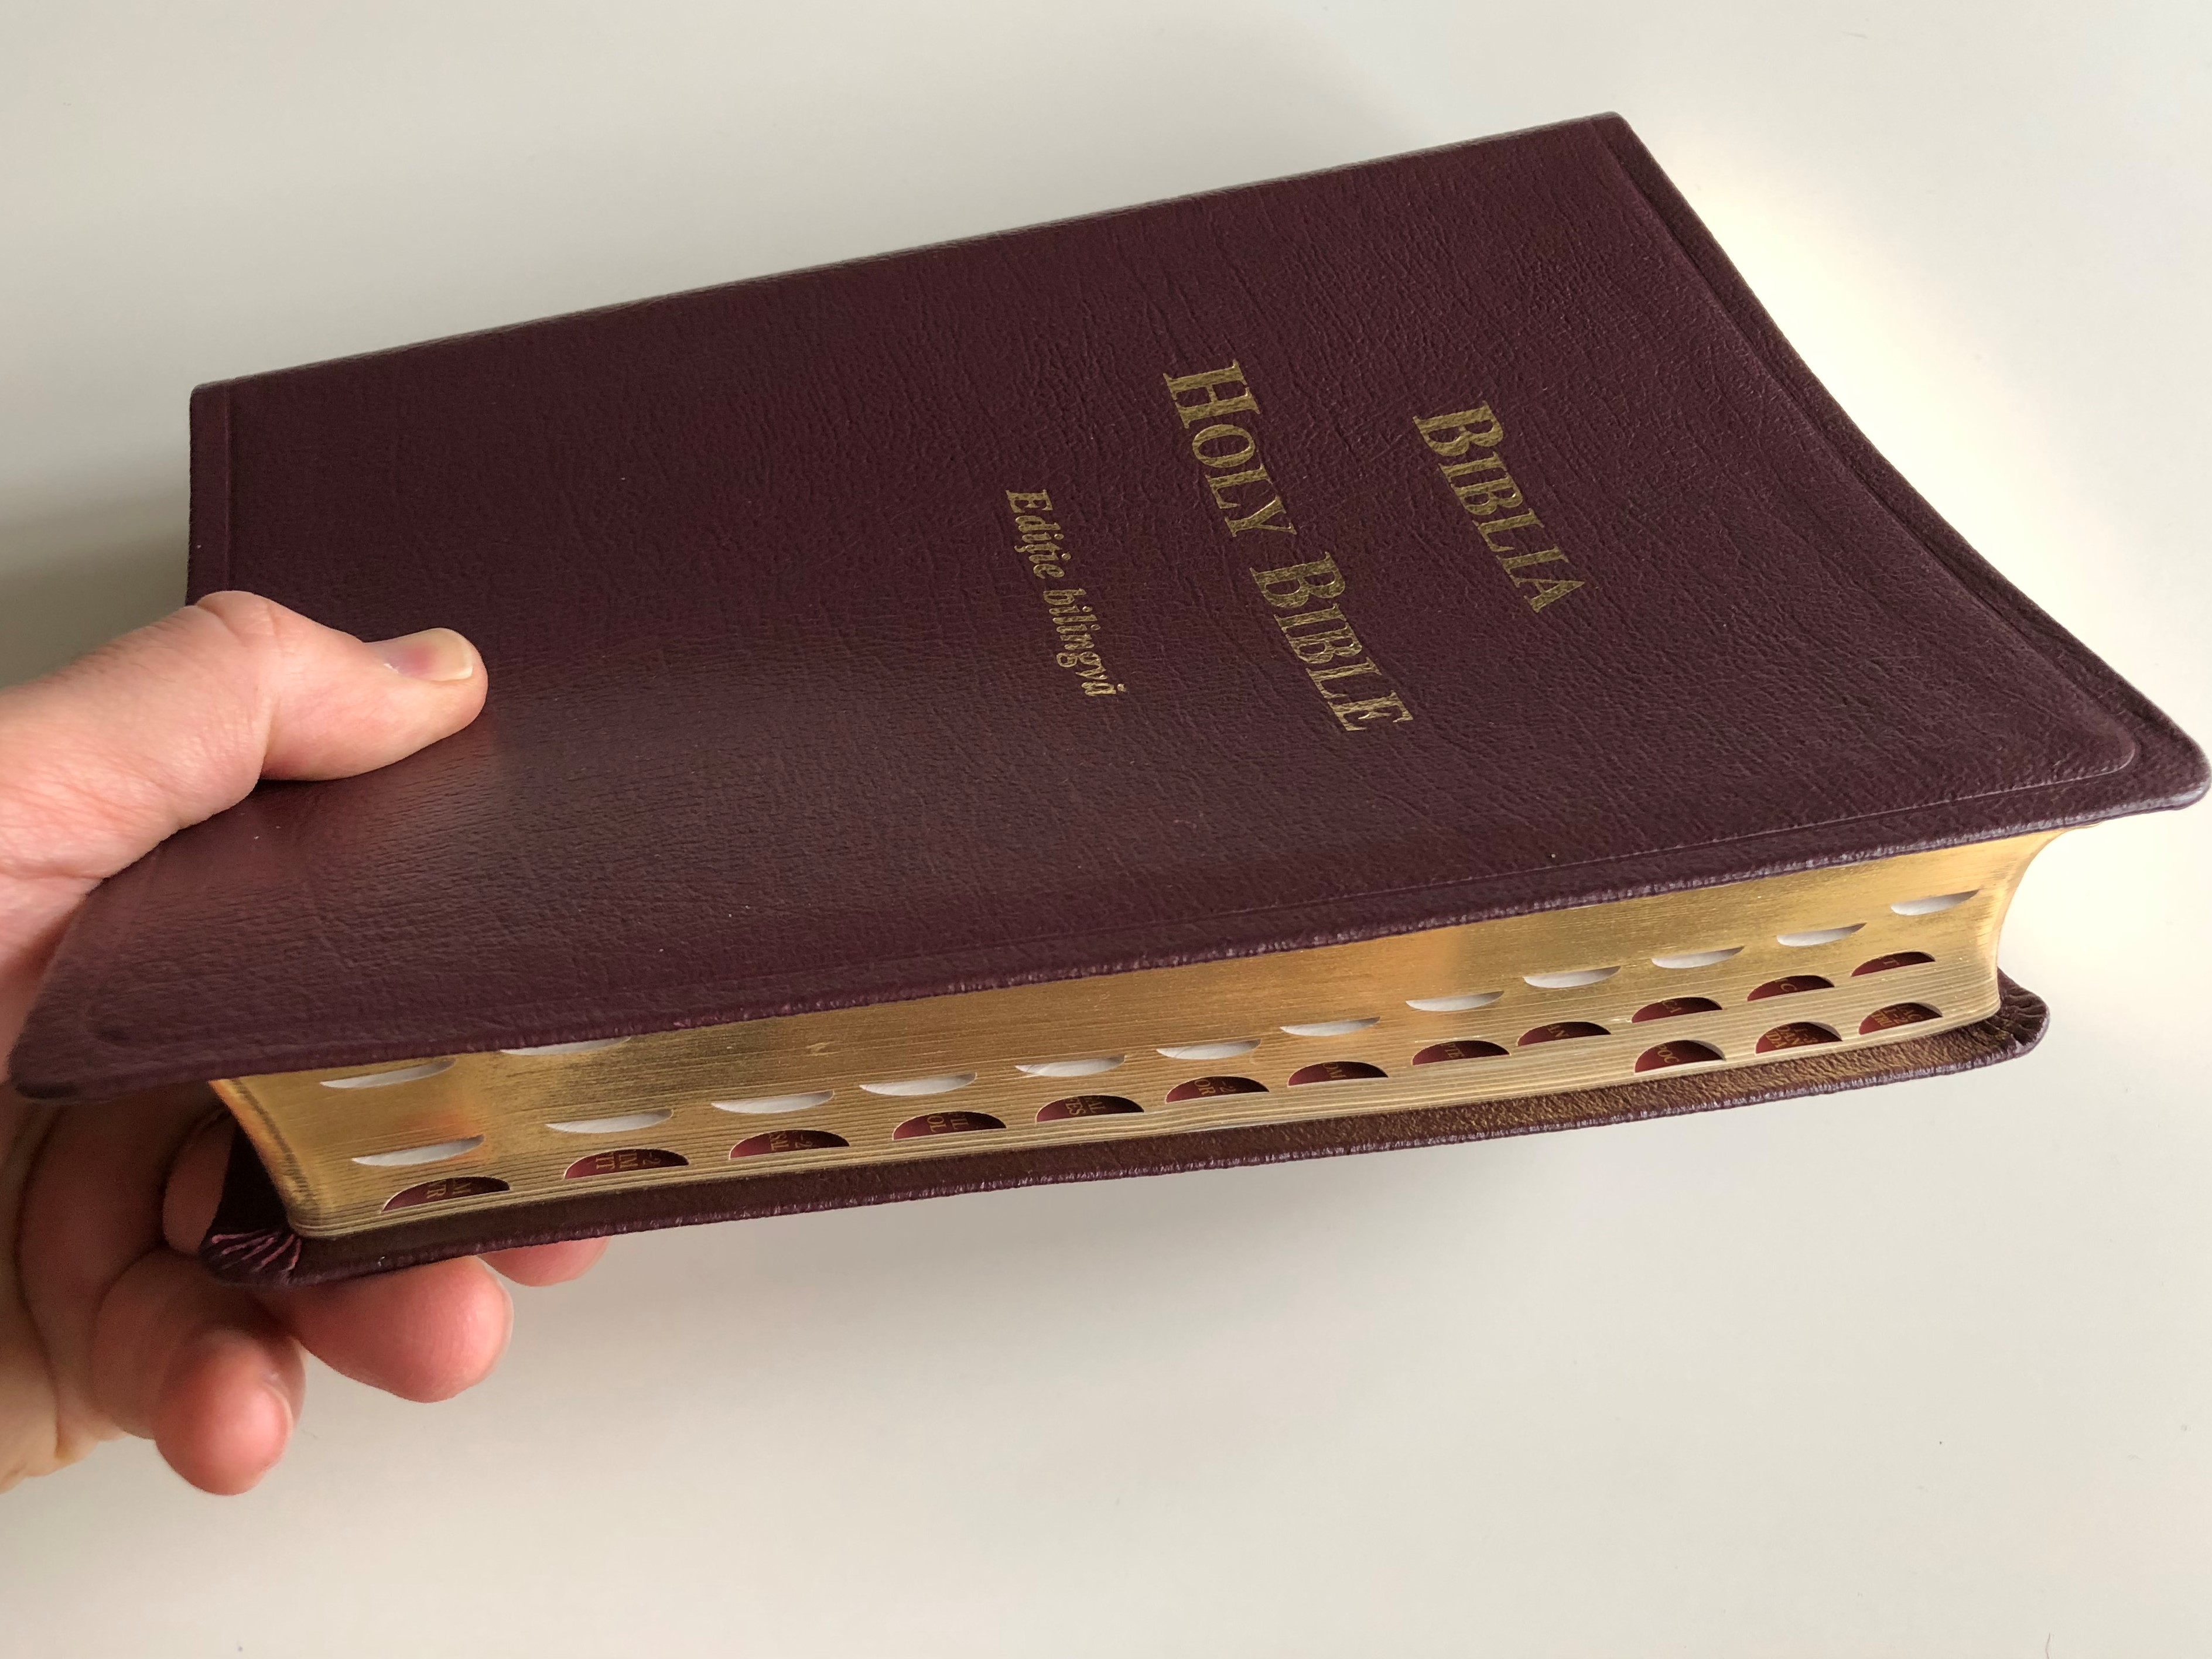 romanian-english-bilingual-holy-bible-rdcv-nkjv-burgundy-genuine-leather-bound-biblia-bilingv-rom-n-englez-golden-edges-thumb-index-2013-romanian-bible-society-21-.jpg